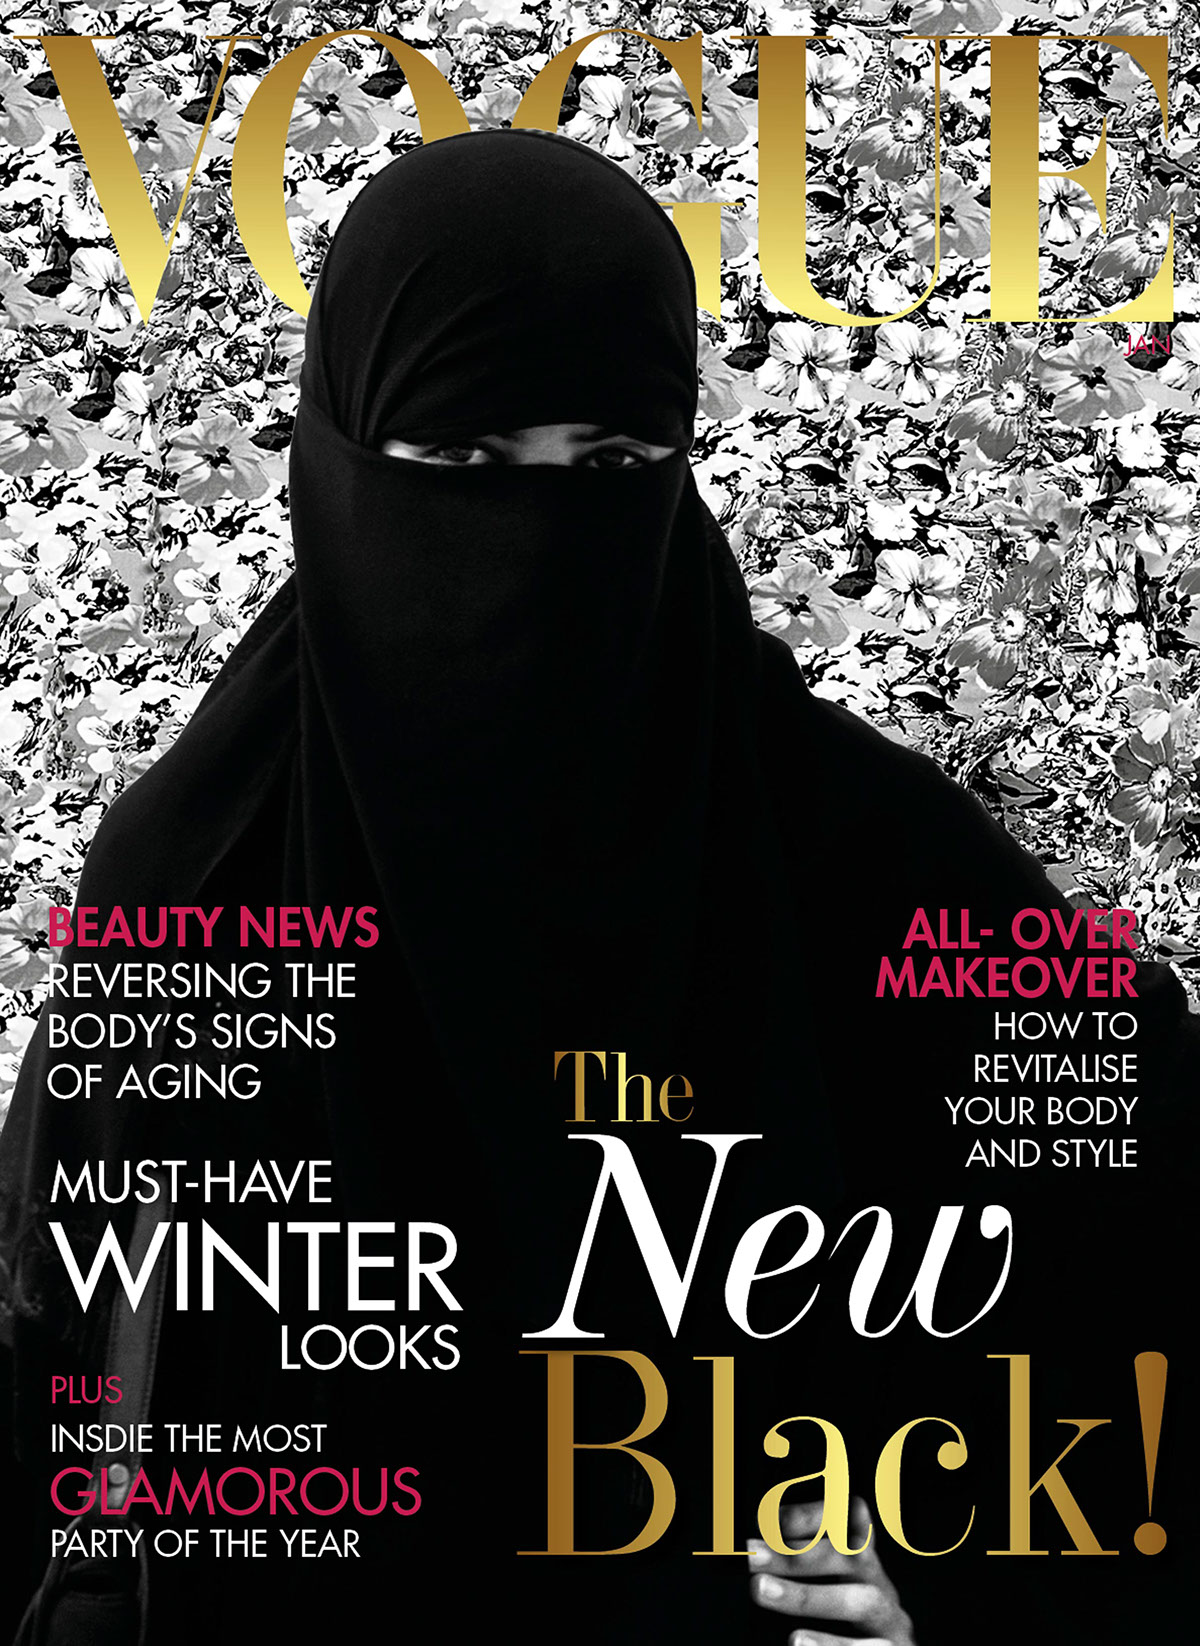 vouge Style Arab arabic force manipulation print typo graphic magazine cover UMM kultum islam burqa